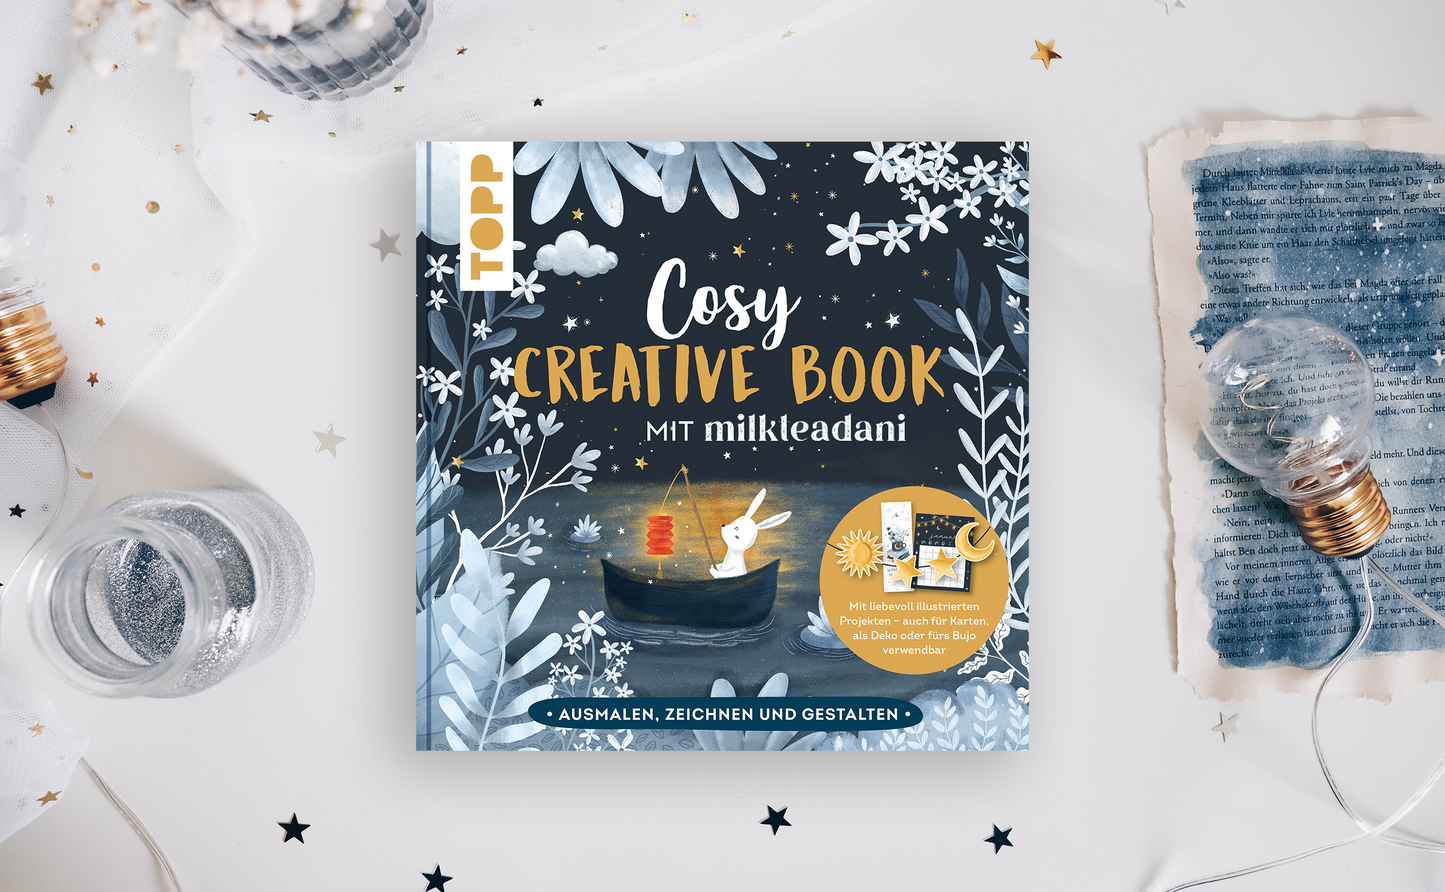 Cosy Creative Book mit milkteadani (german language)